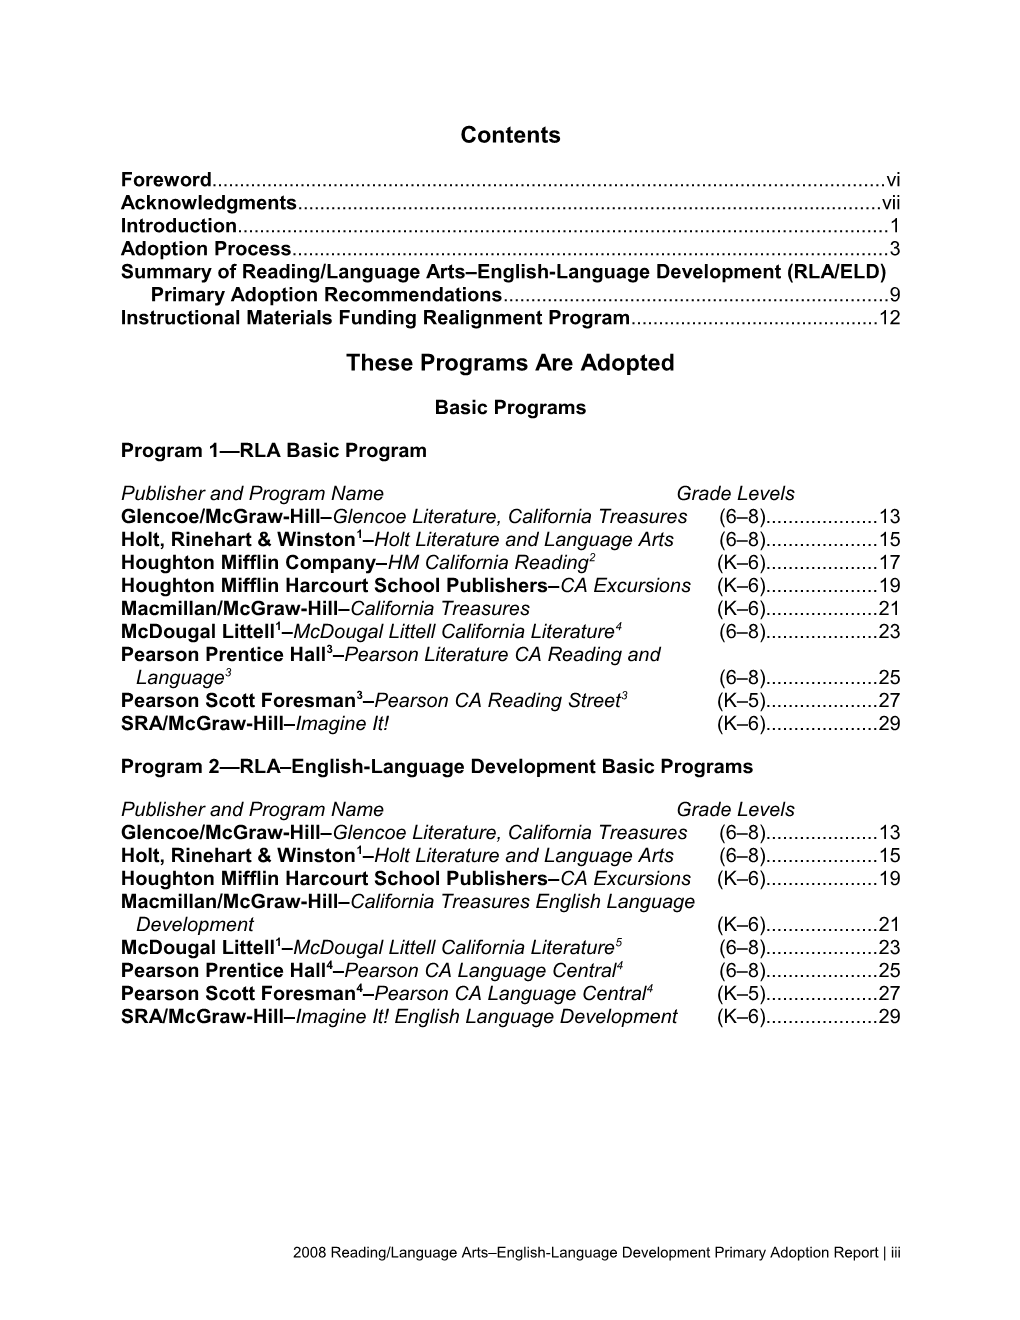 SBE 2008 RLA/ELD Primary Adoption Report - Instructional Materials (CA Dept of Education)